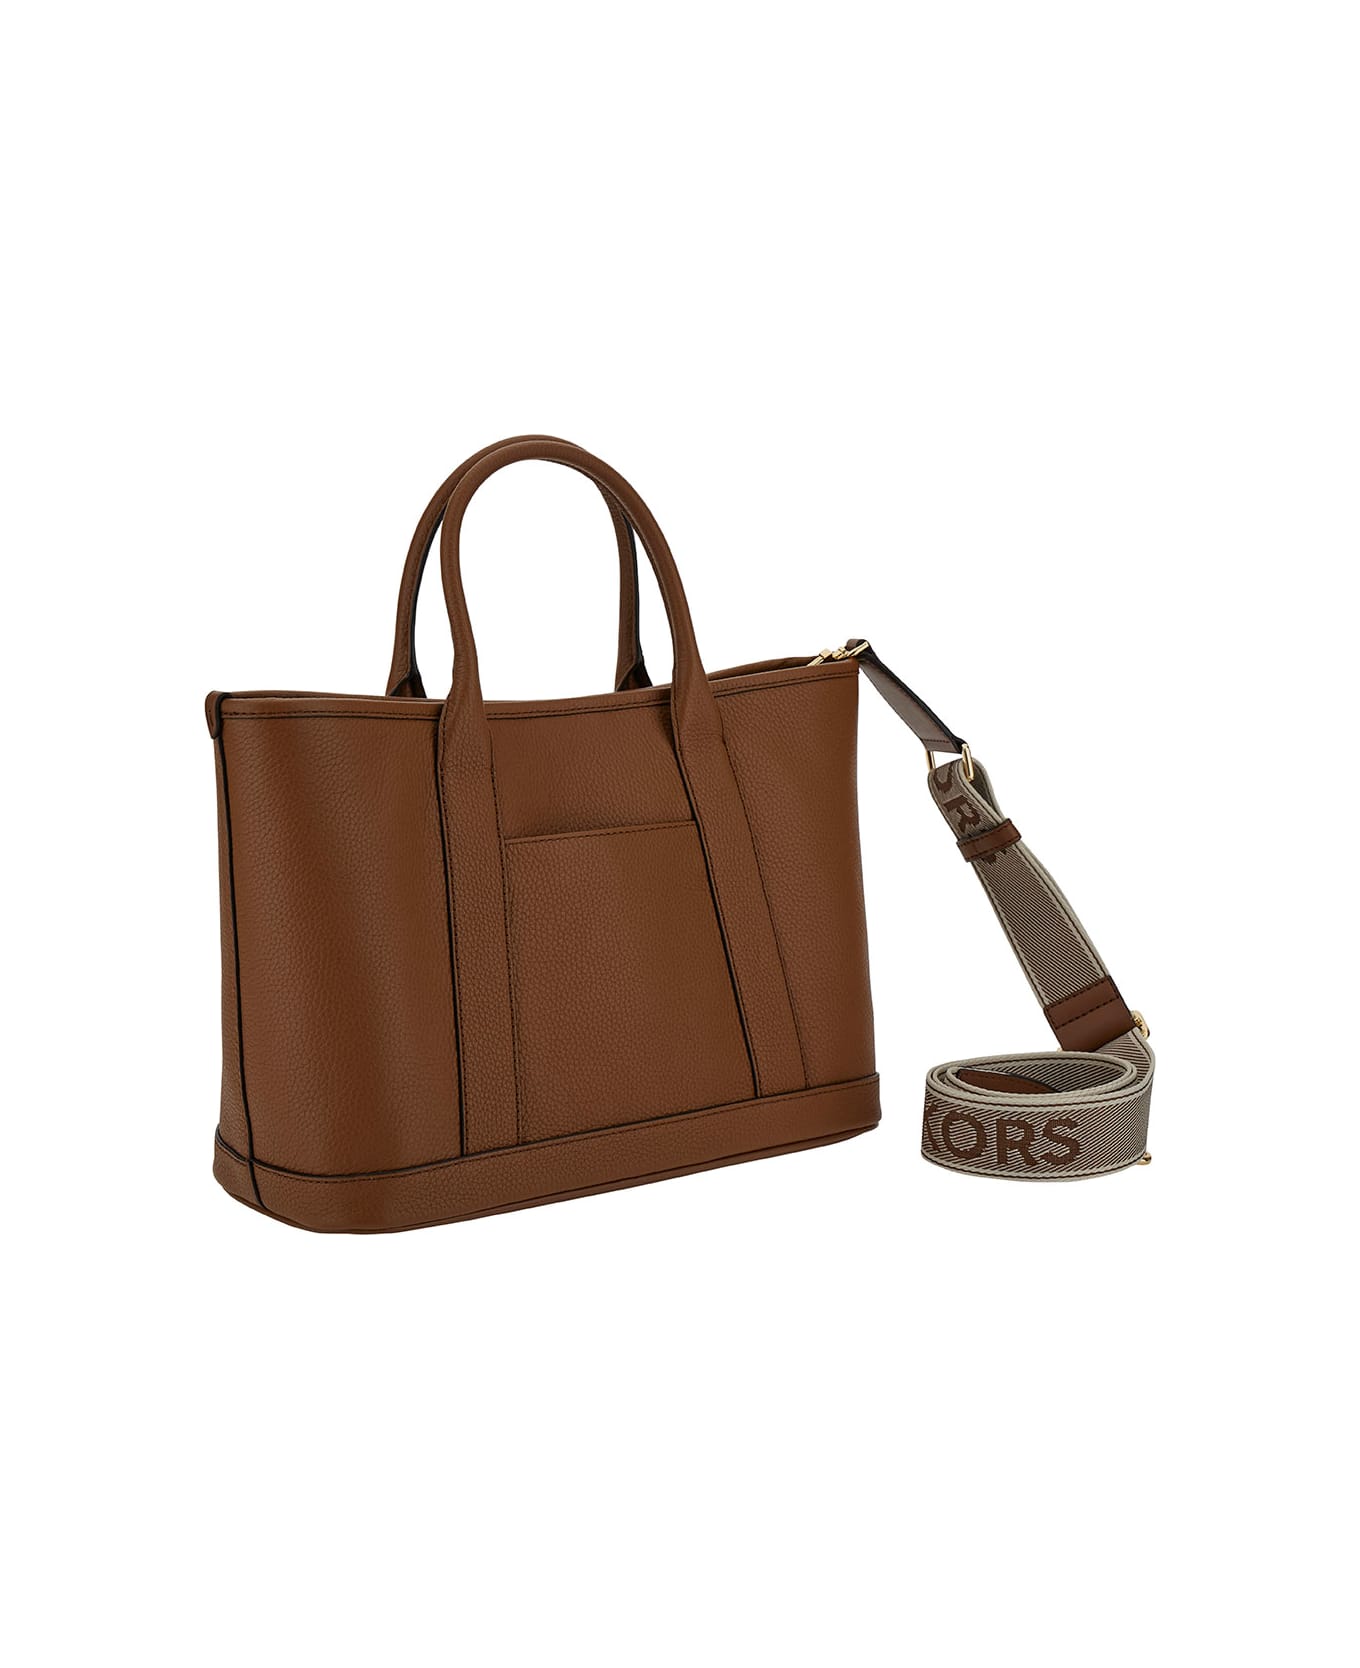 MICHAEL Michael Kors 'luisa' Beige Tote Bag With Mk Logo Detail In Grain Leather Woman - Beige トートバッグ